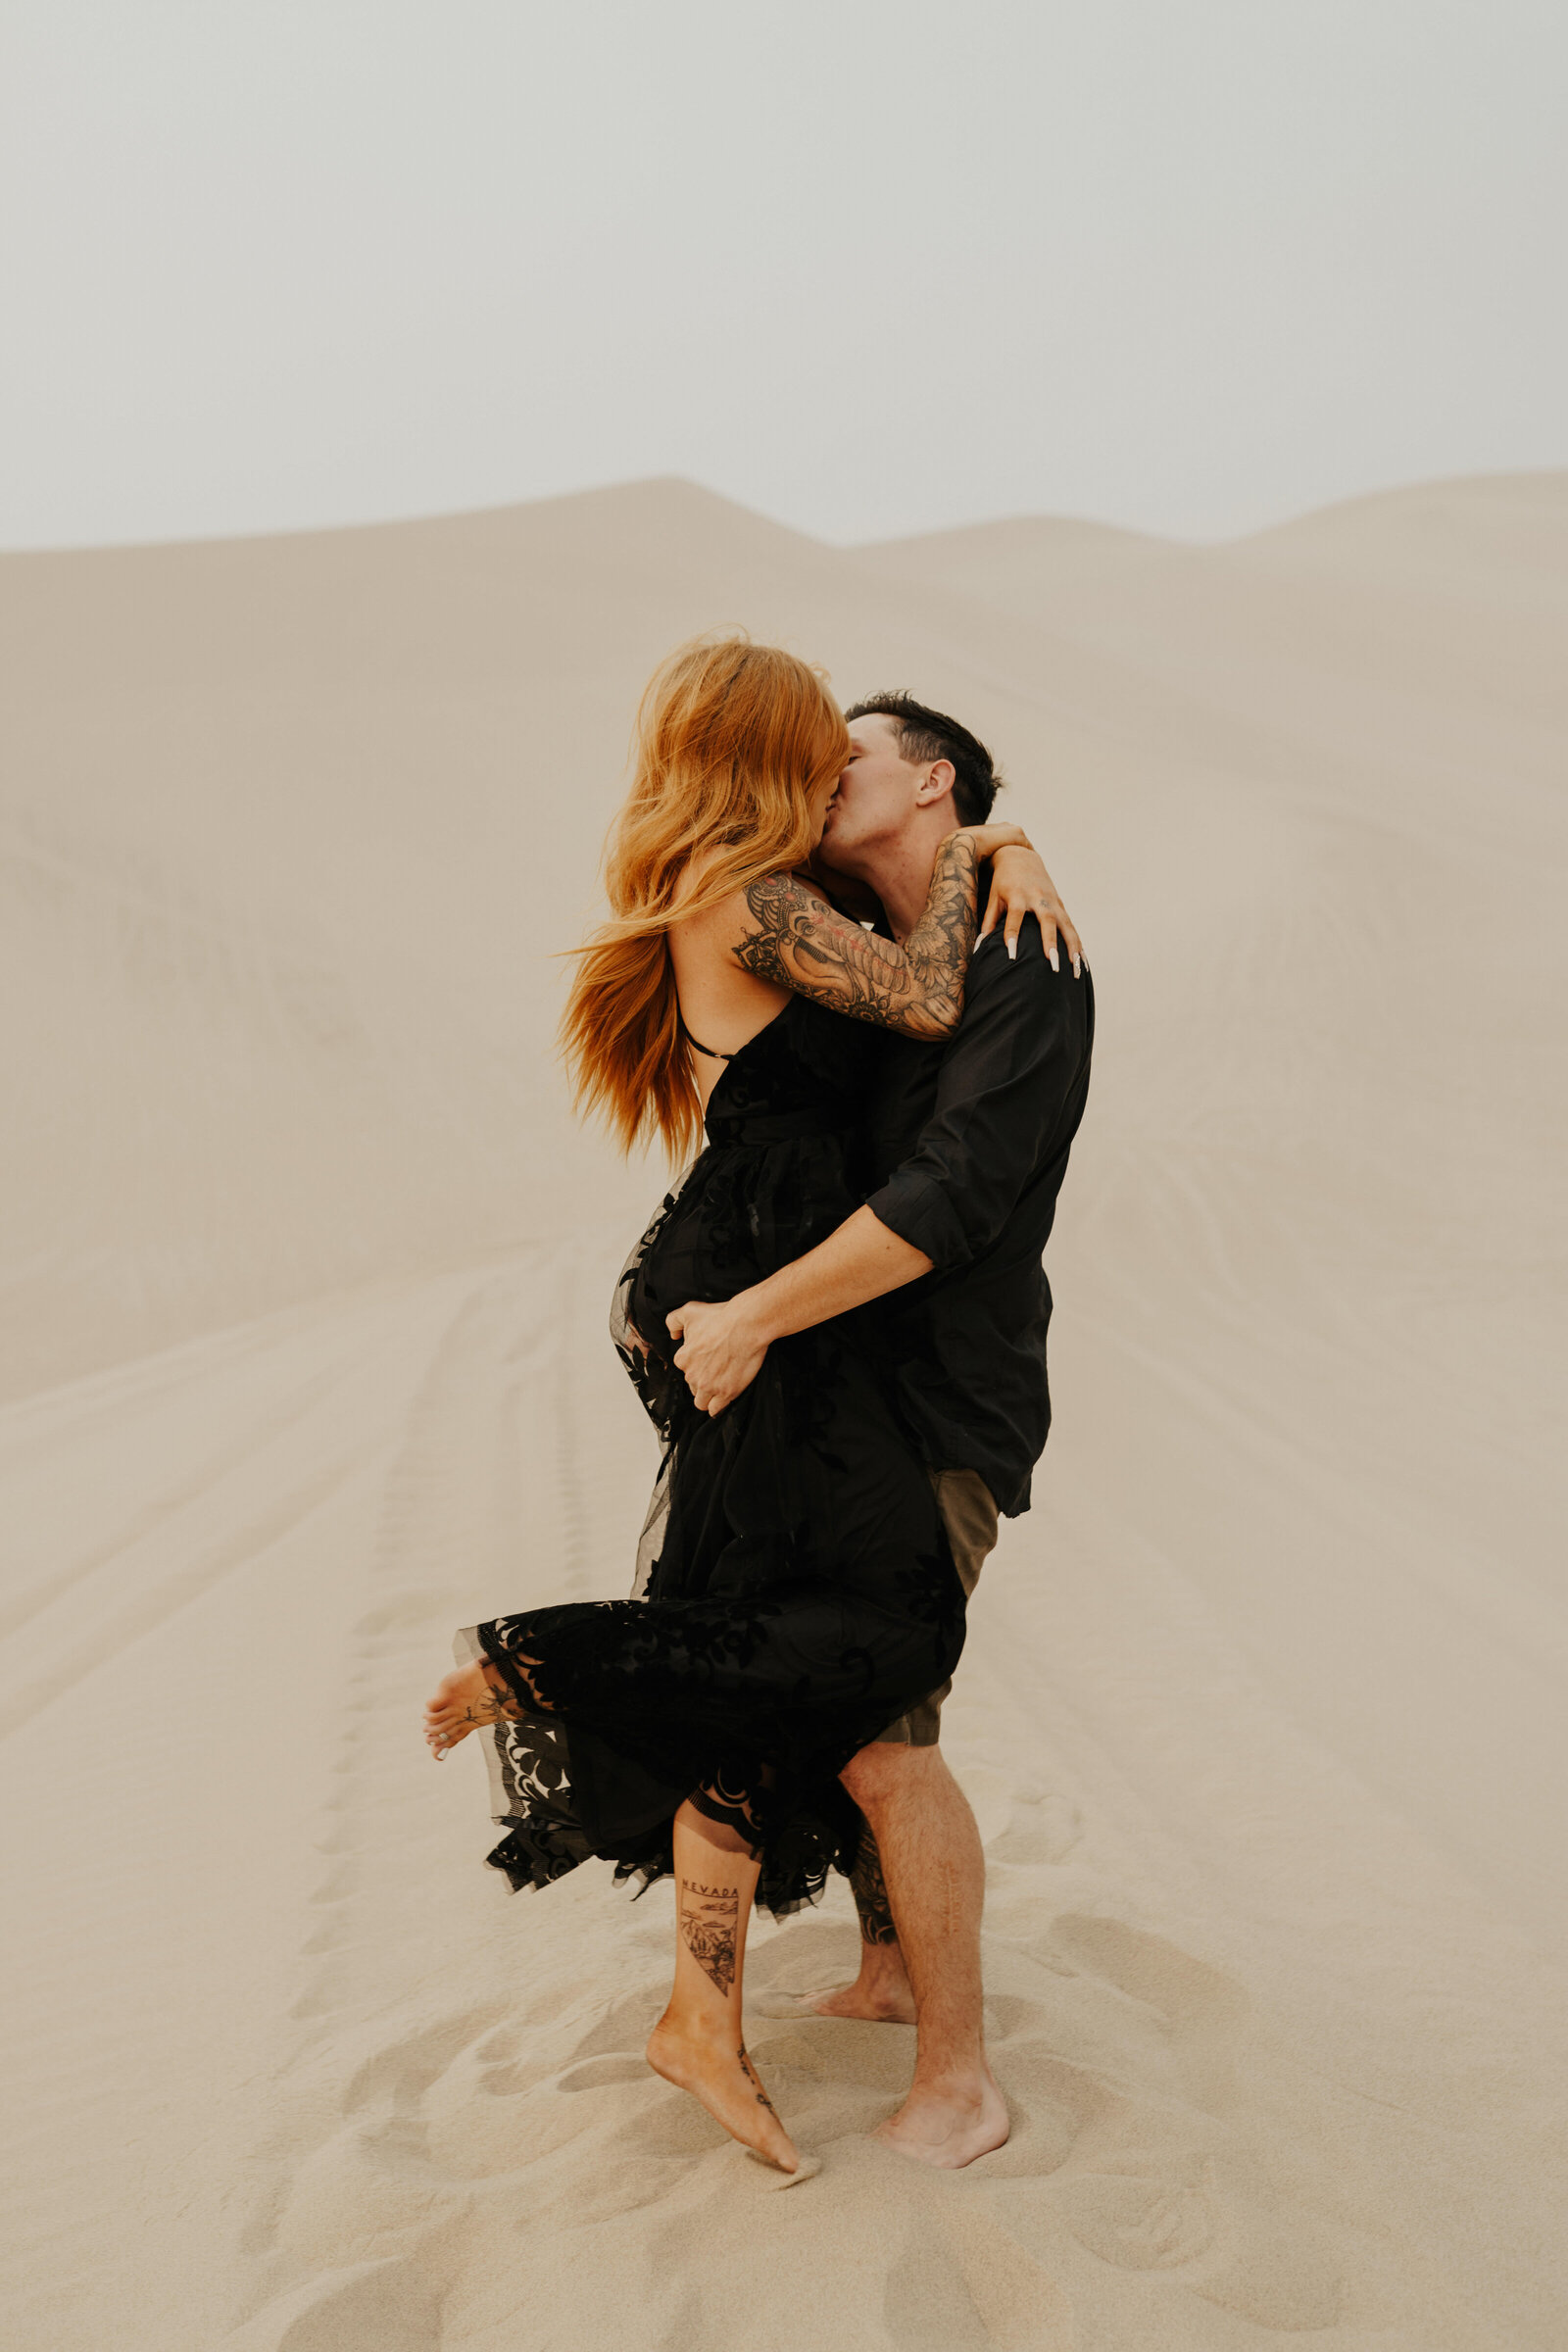 Sand Dunes Couples Photos - Raquel King Photography9